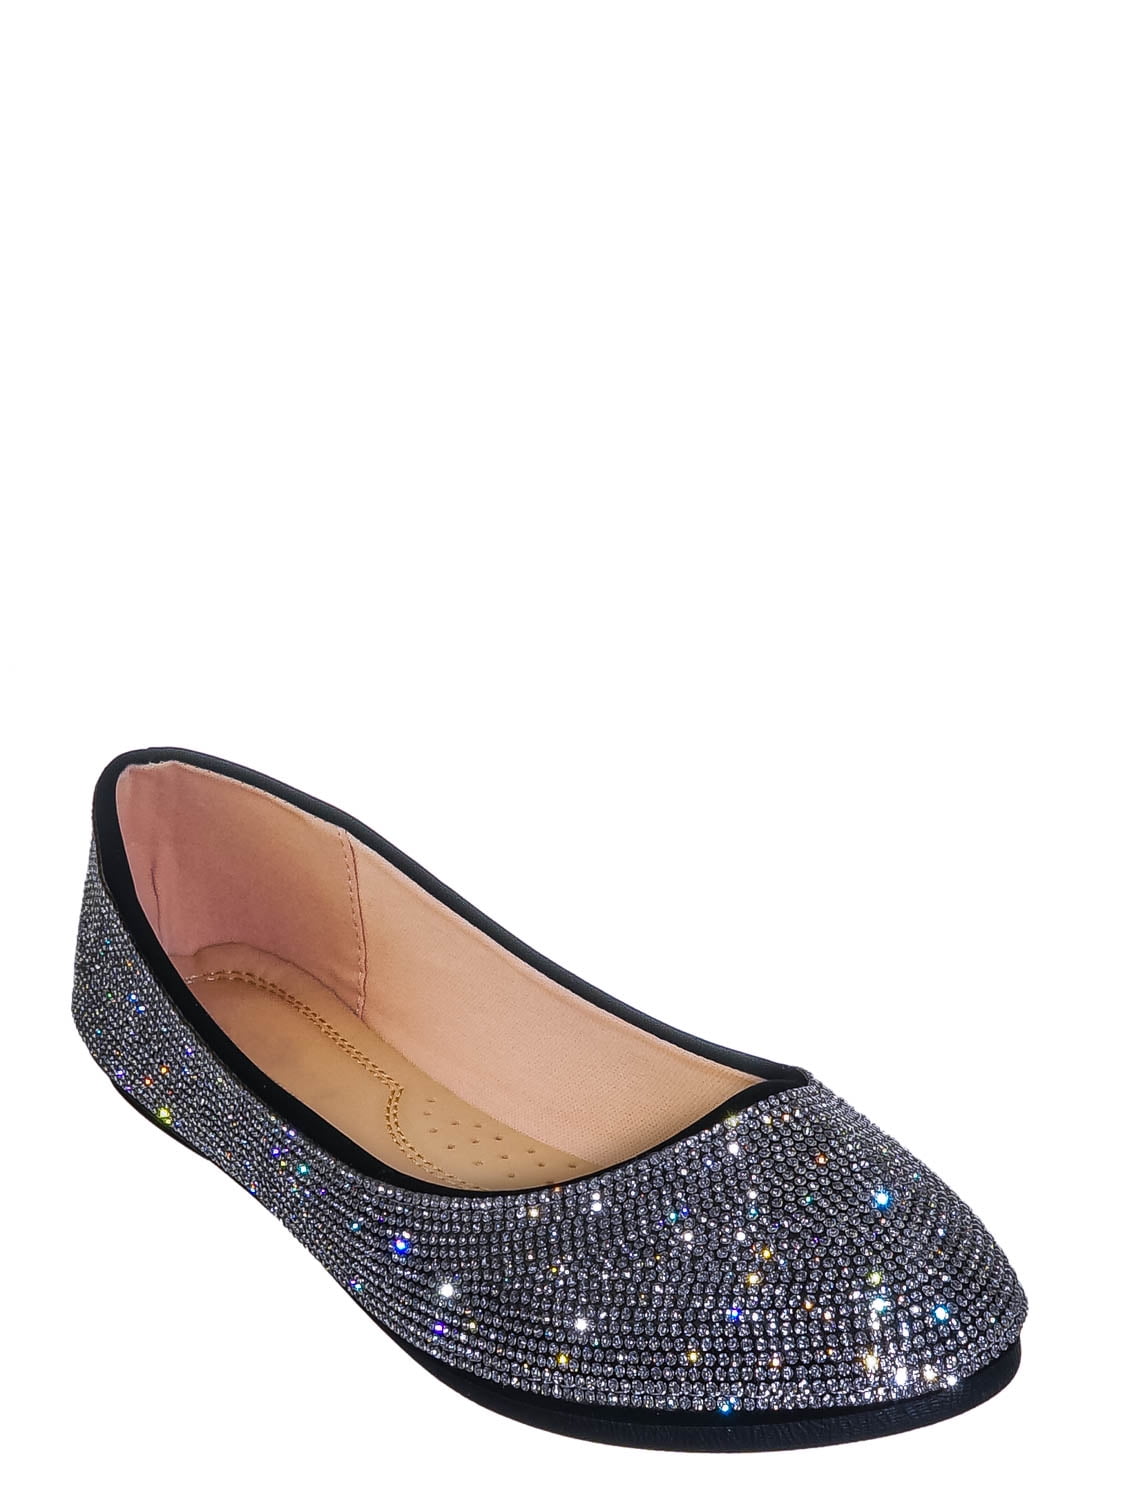 Women's Flats Rhinestones Slip On Pointy Toe slip on ballet  Shoes Plus Size MON